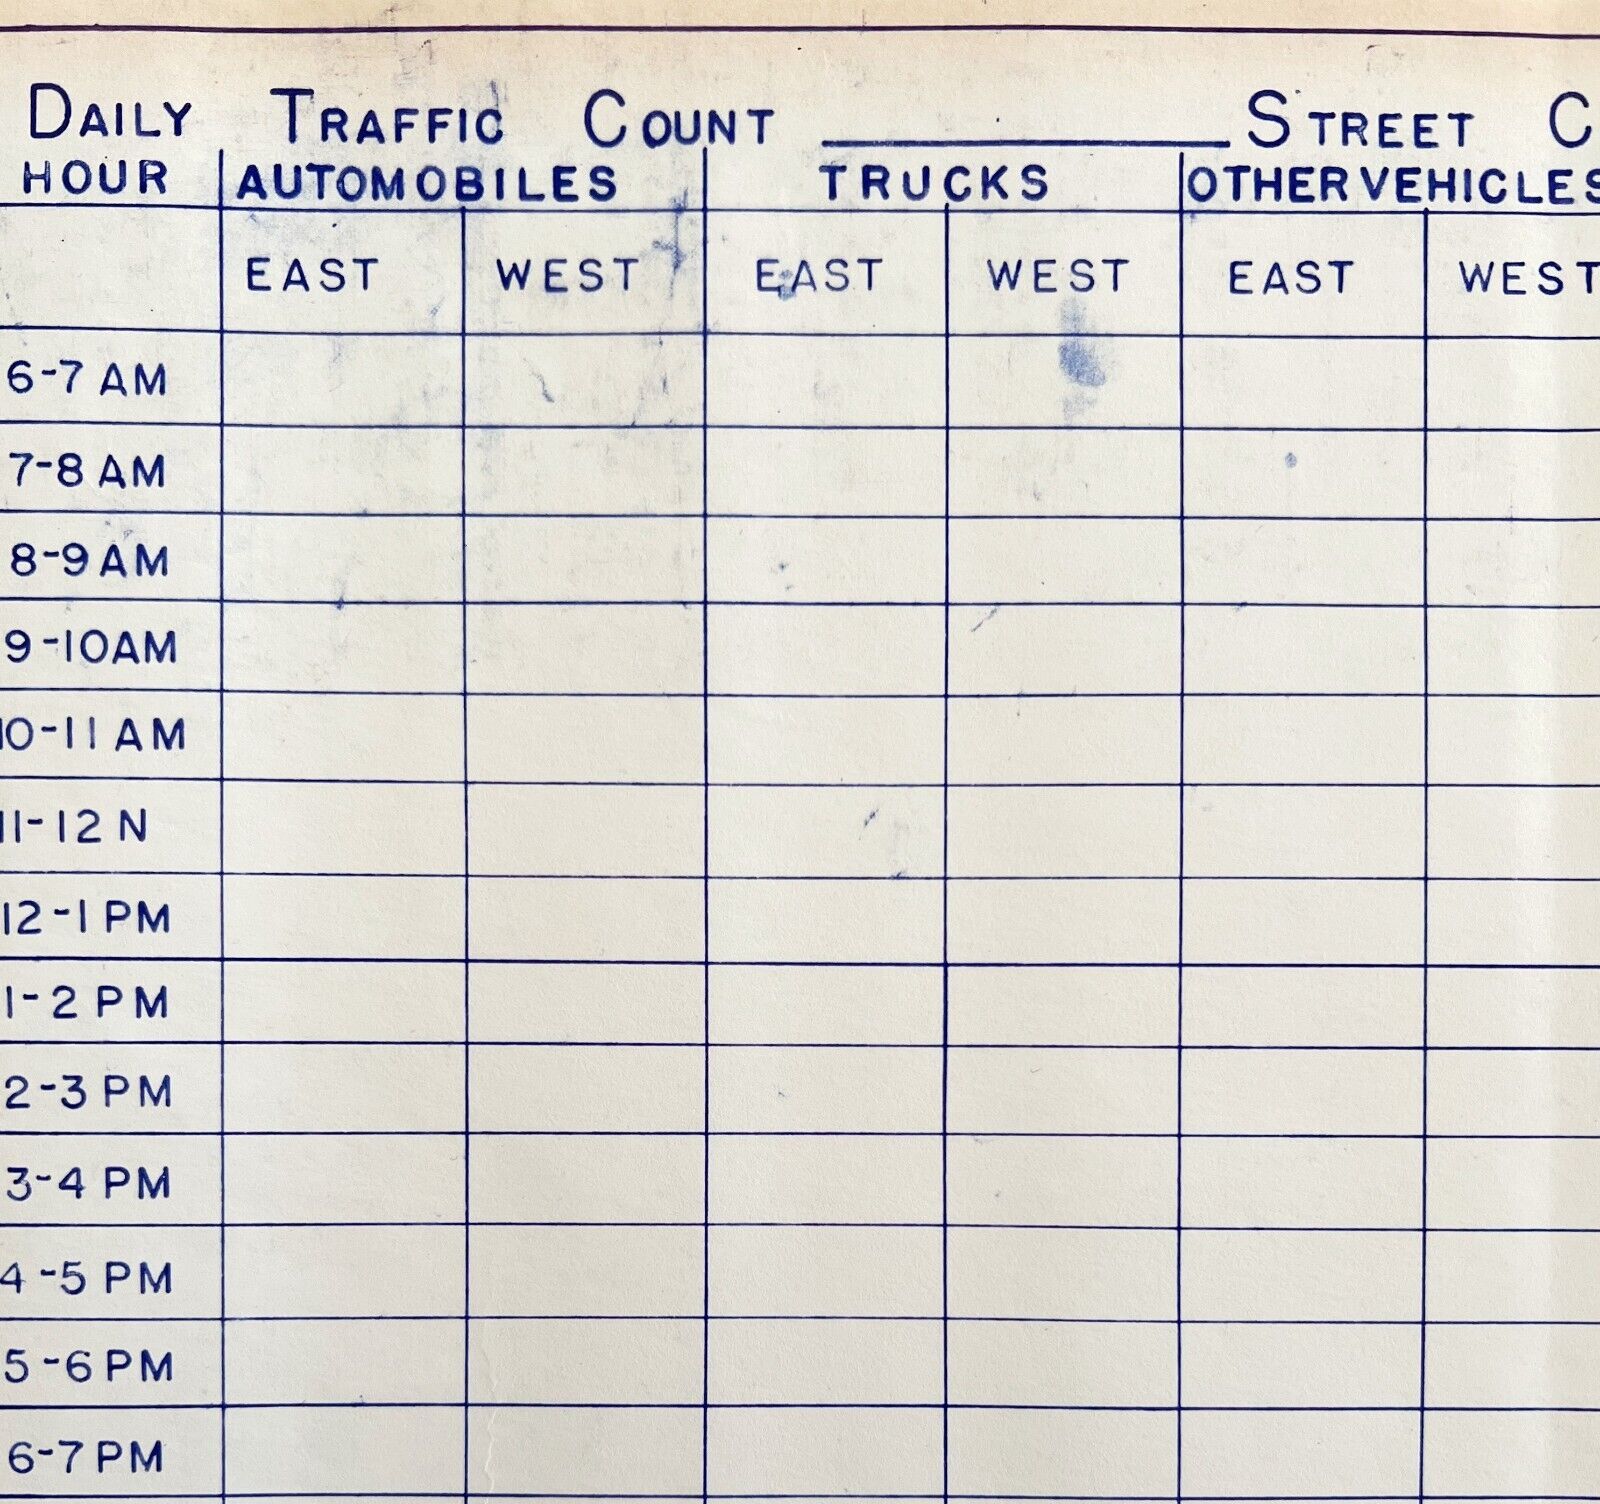 1958 Railroad Bangor Aroostook Daily Traffic Count Sheet Blueprint J10 DWDD15